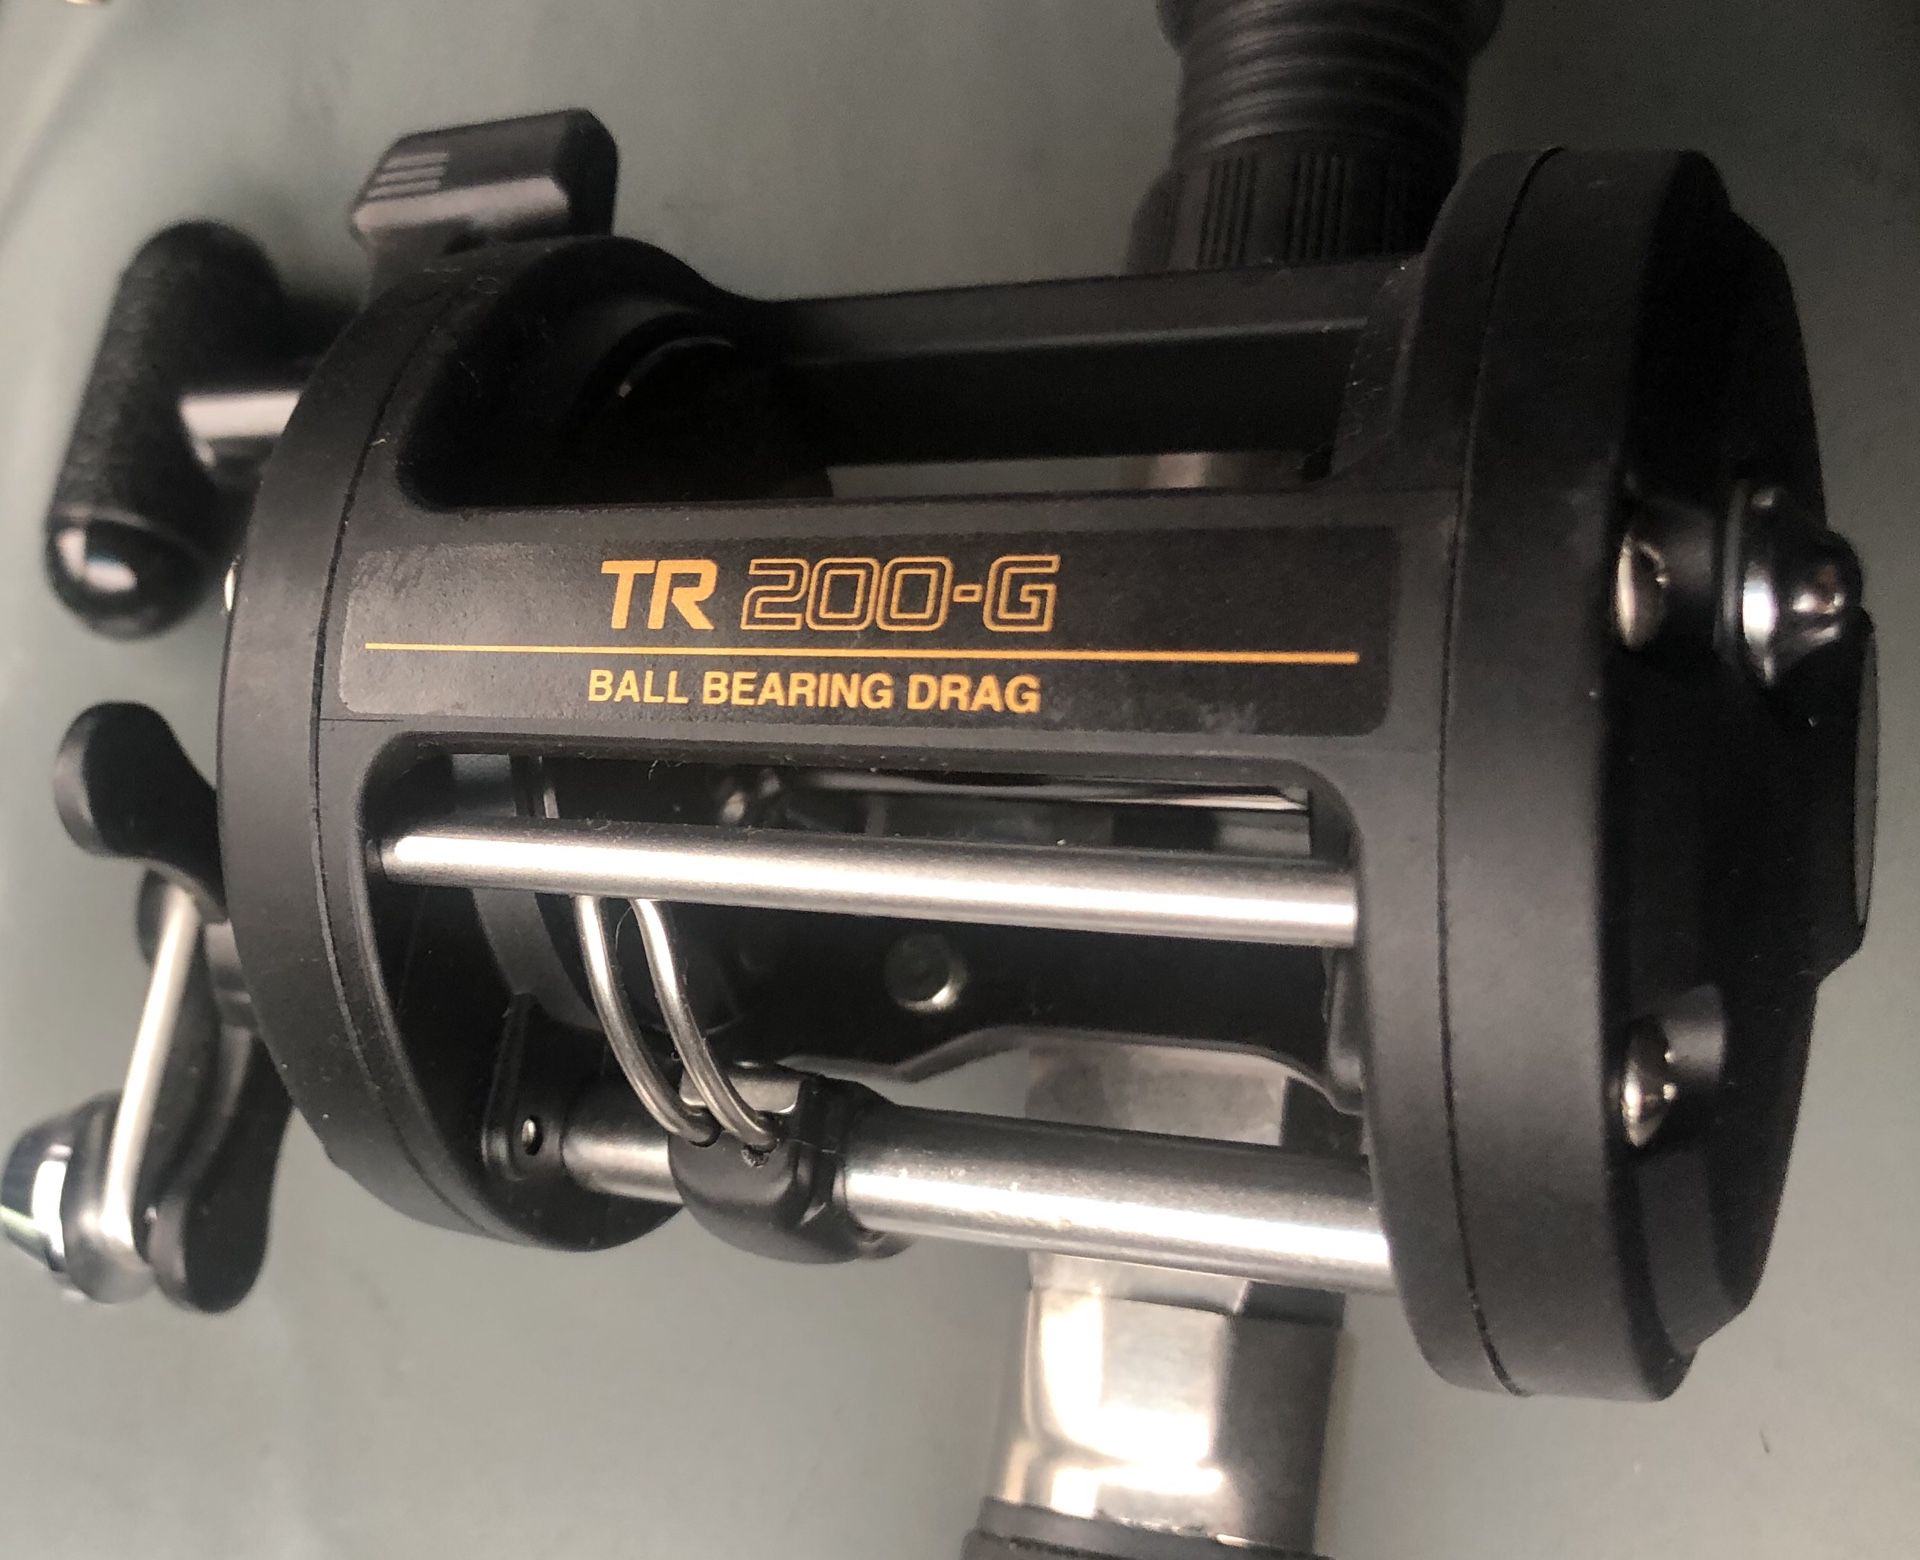 Shimano TR 200-G bait casting trolling fishing reel brand new